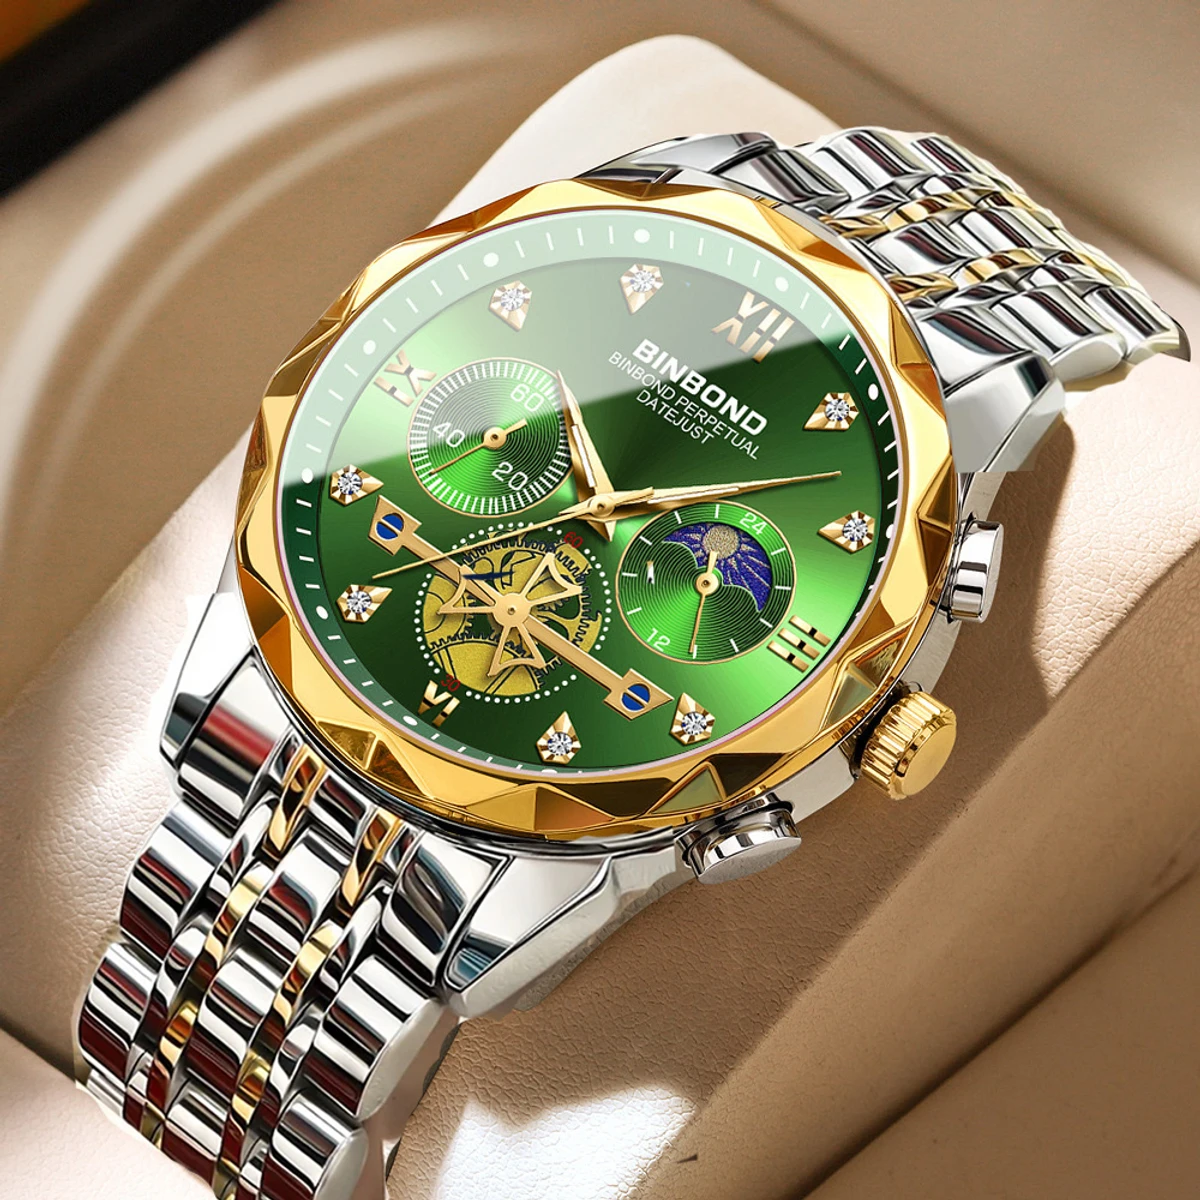 New Luxury Watch For Men Stainless Steel Waterproof Business Sport Wristwatches- Green